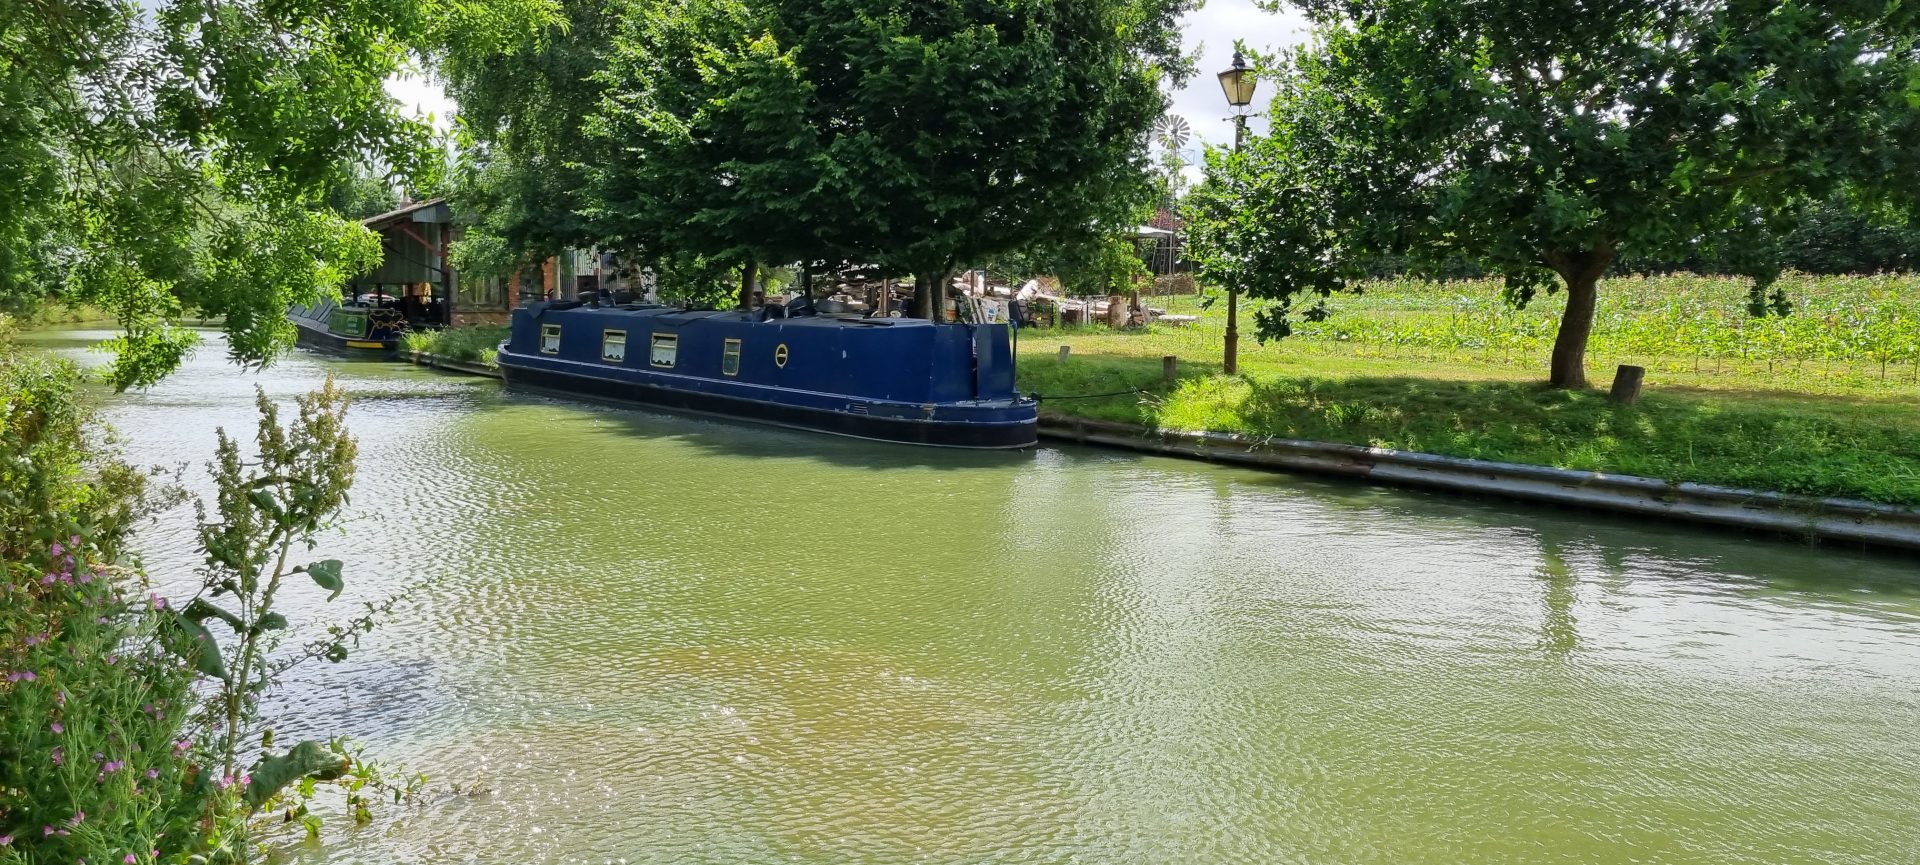 Forge farm moorings - Oxford canal